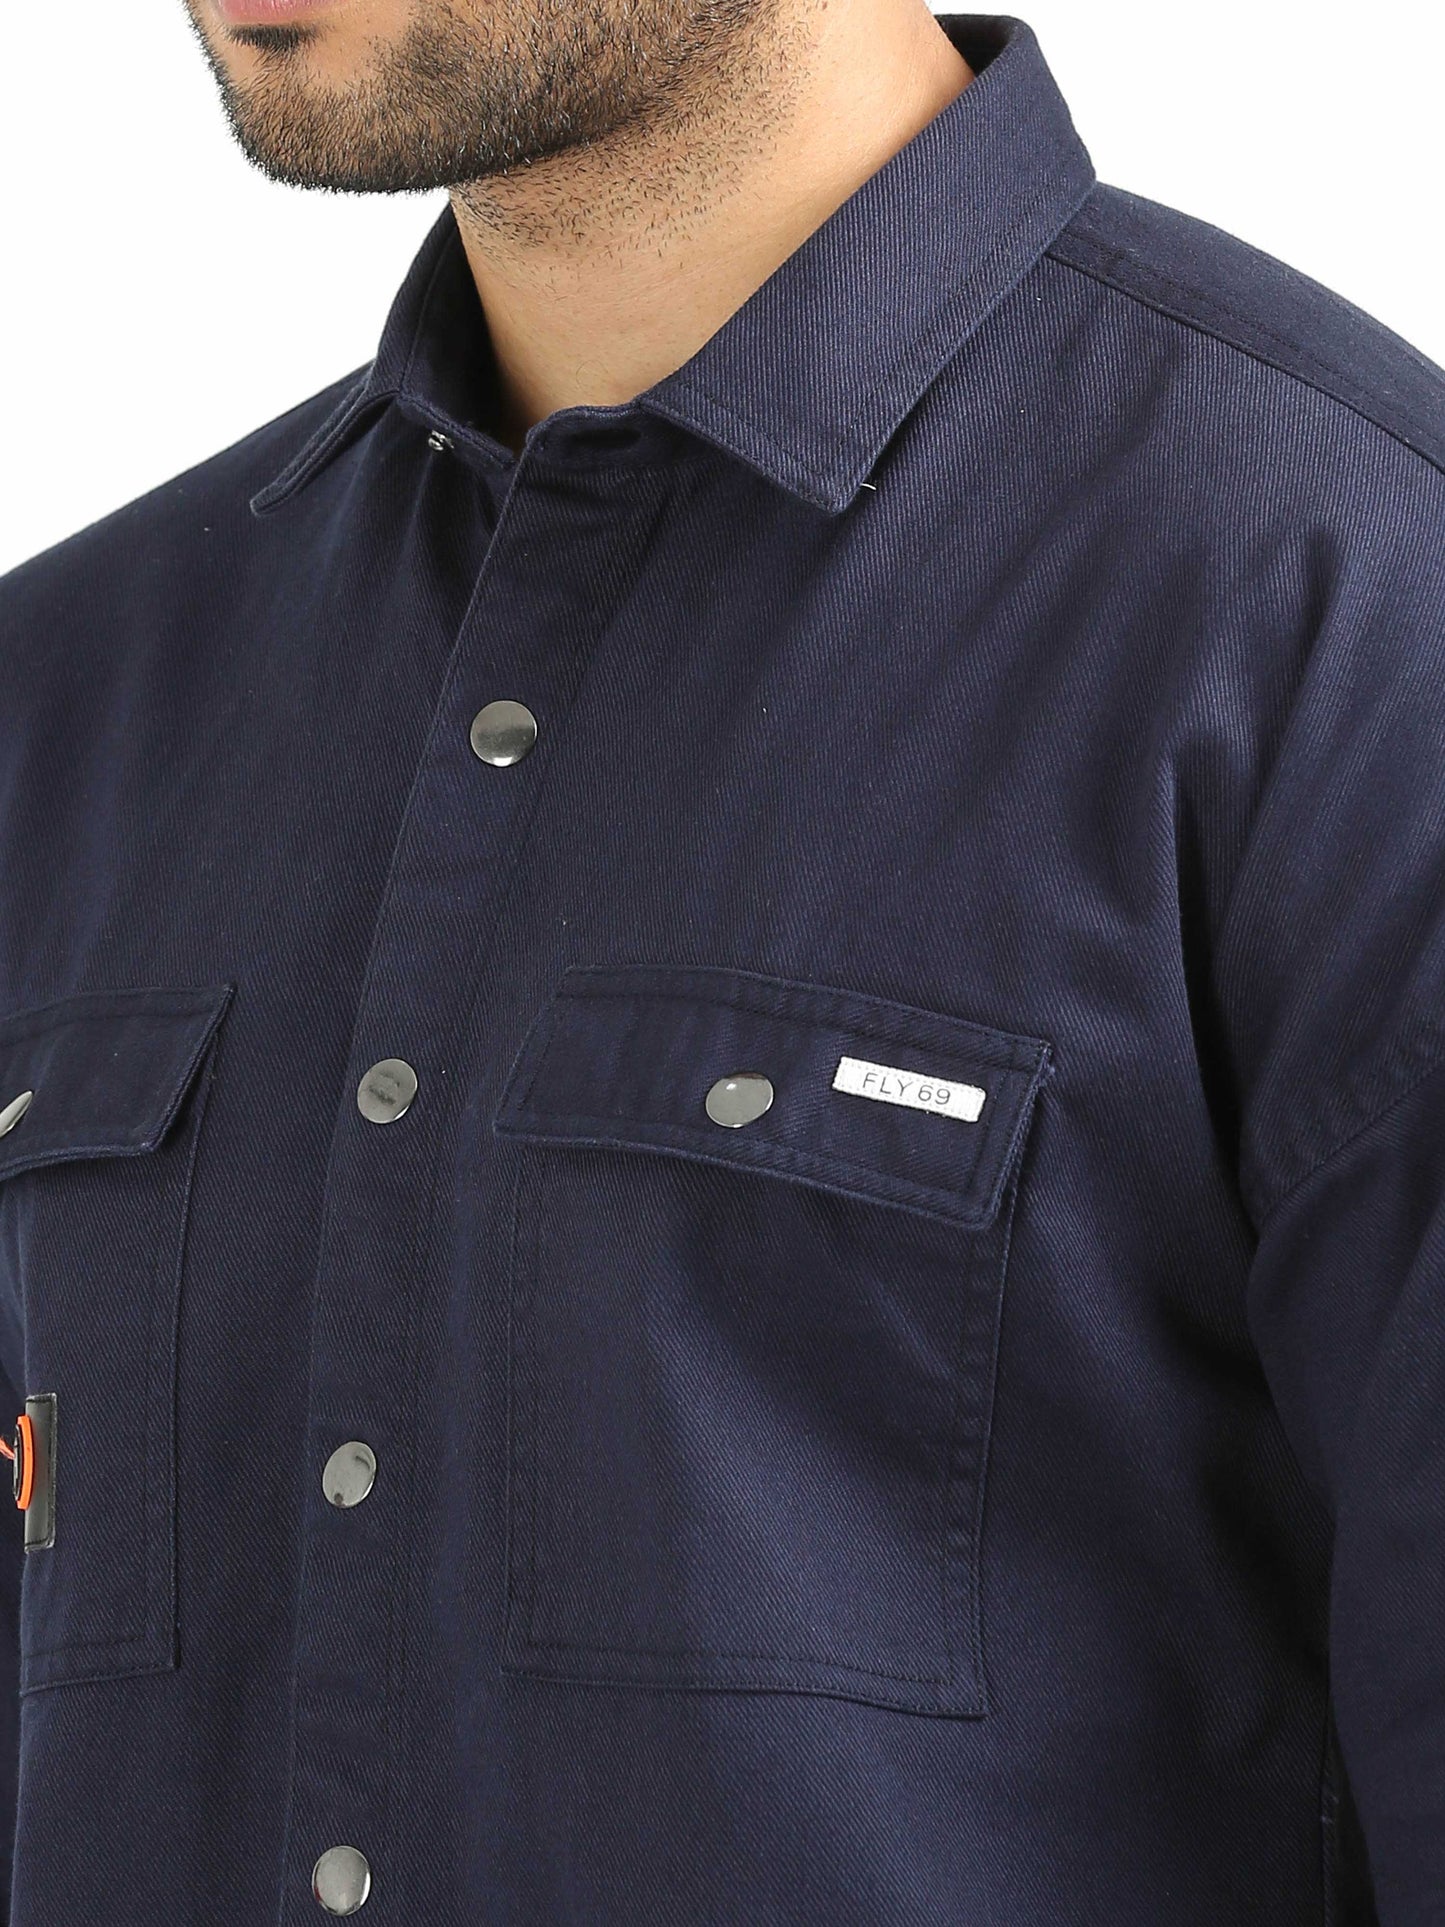 Navy Blue Drop Shoulder Shirt